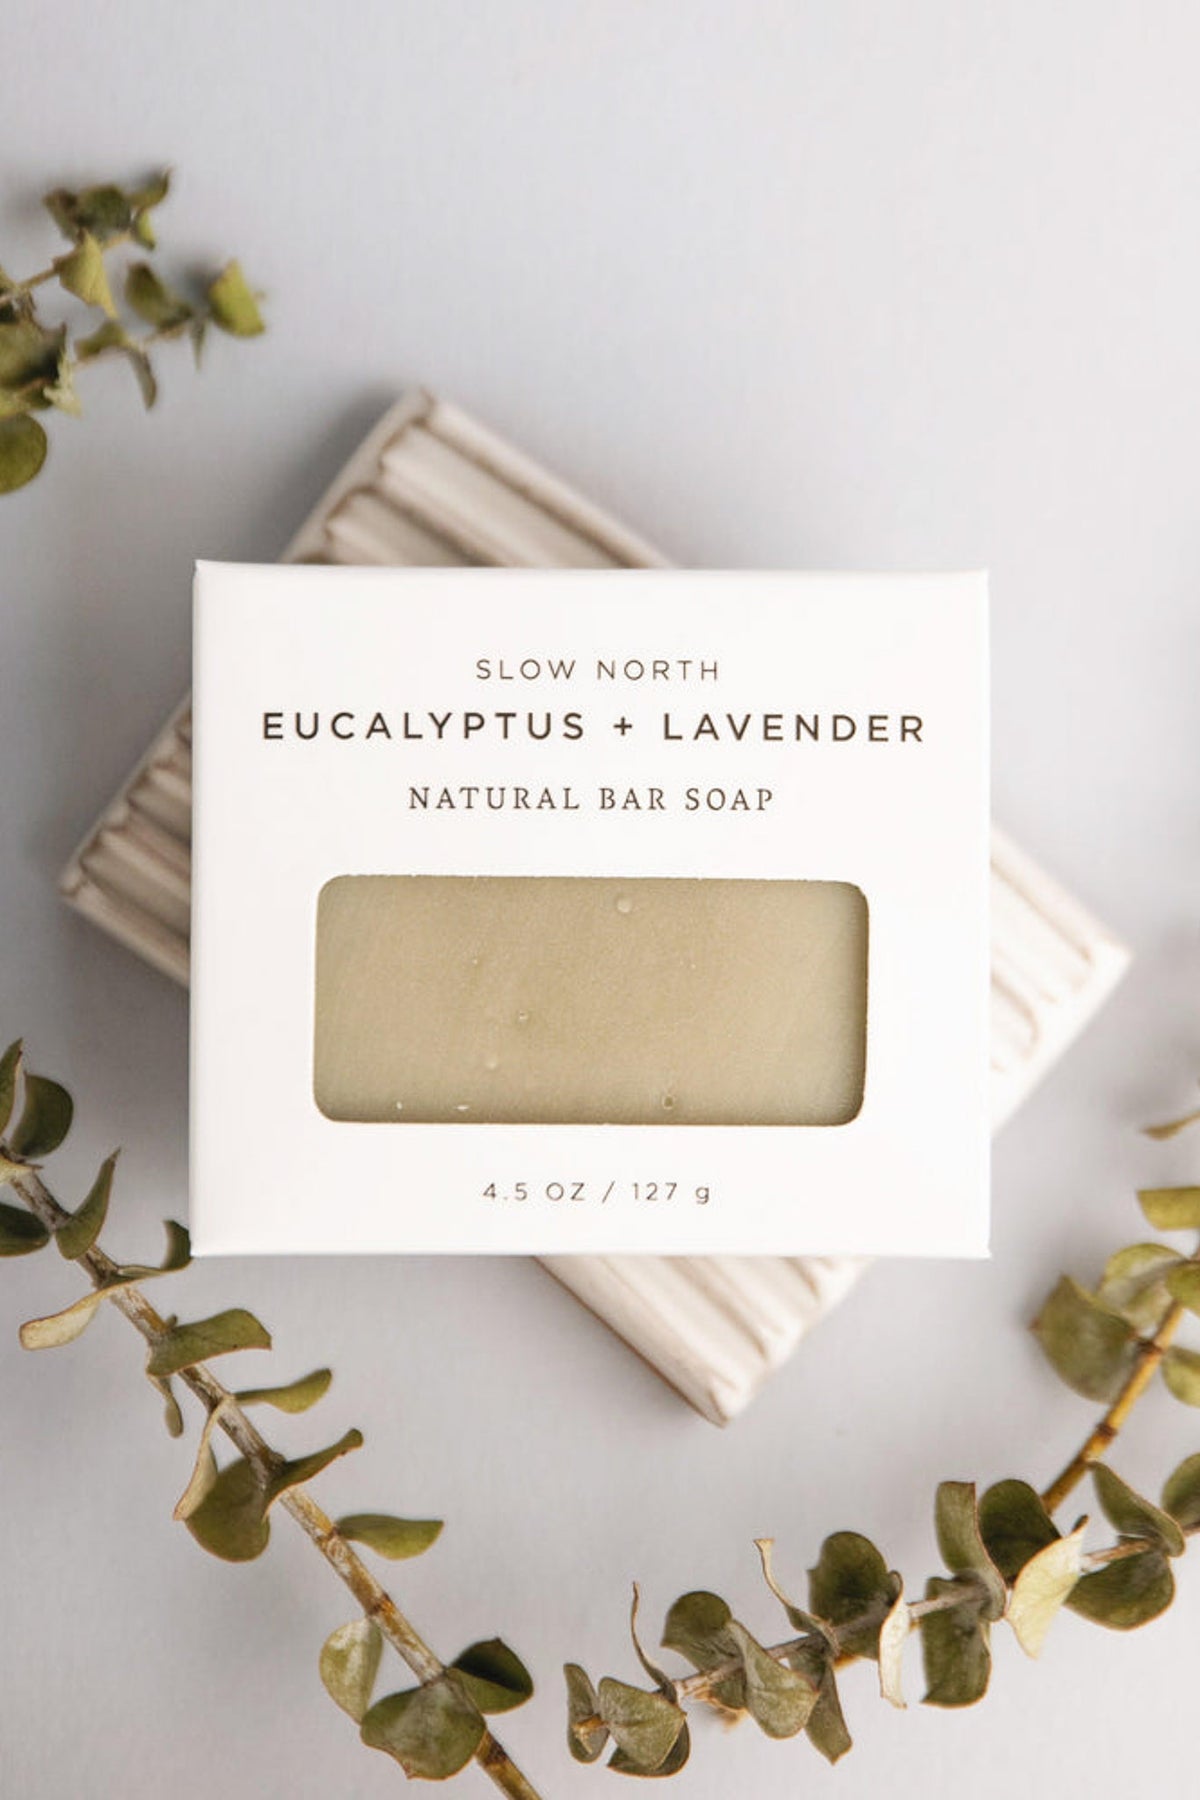 Slow North Eucalyptus + Lavender Natural Bar Soap